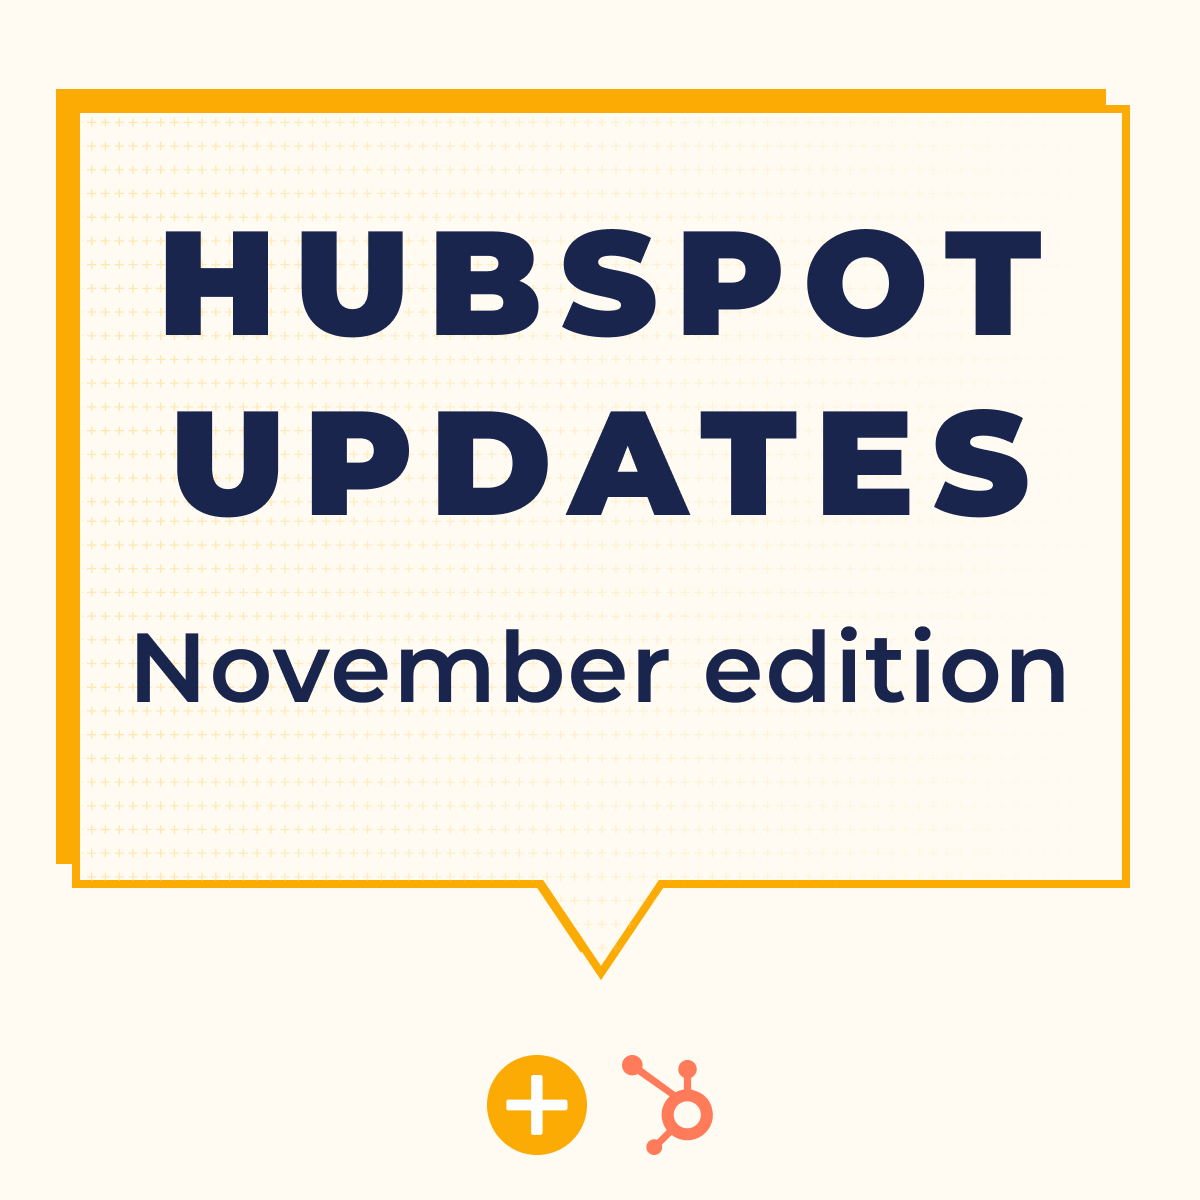 HUBSPOT UPDATES November edition